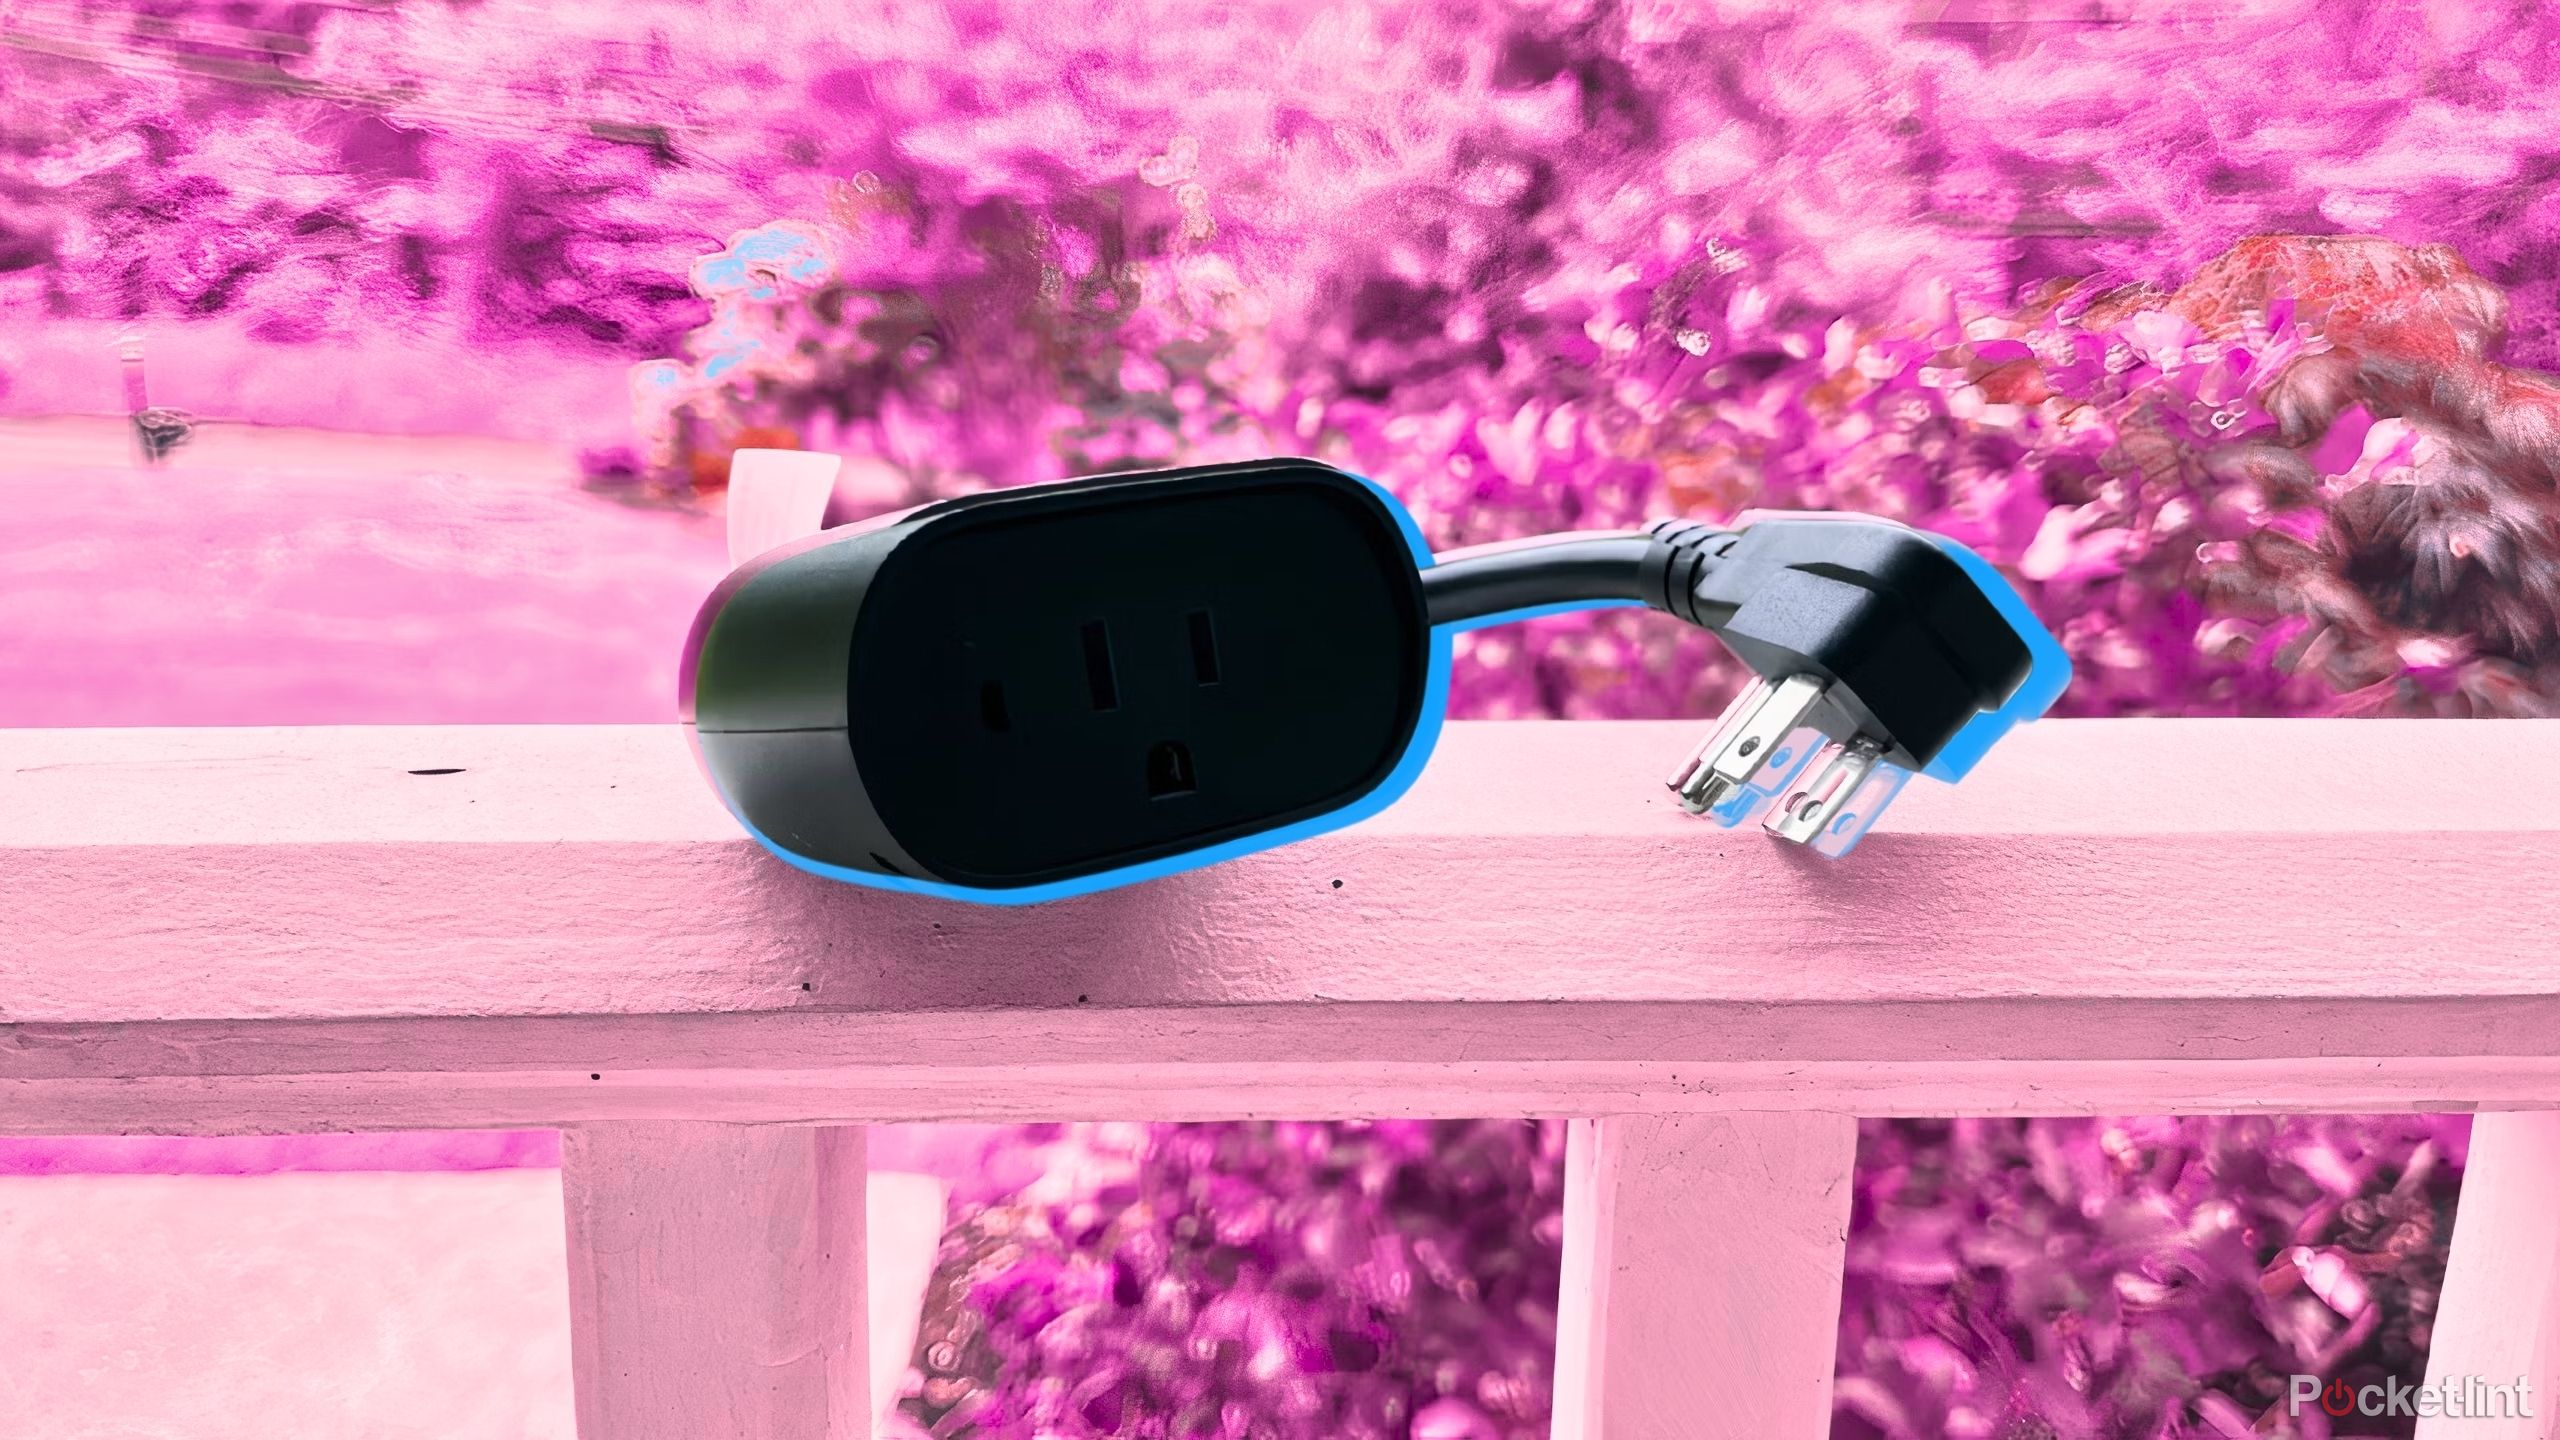 The Kasa Outdoor Smart Plug sits on a white railing